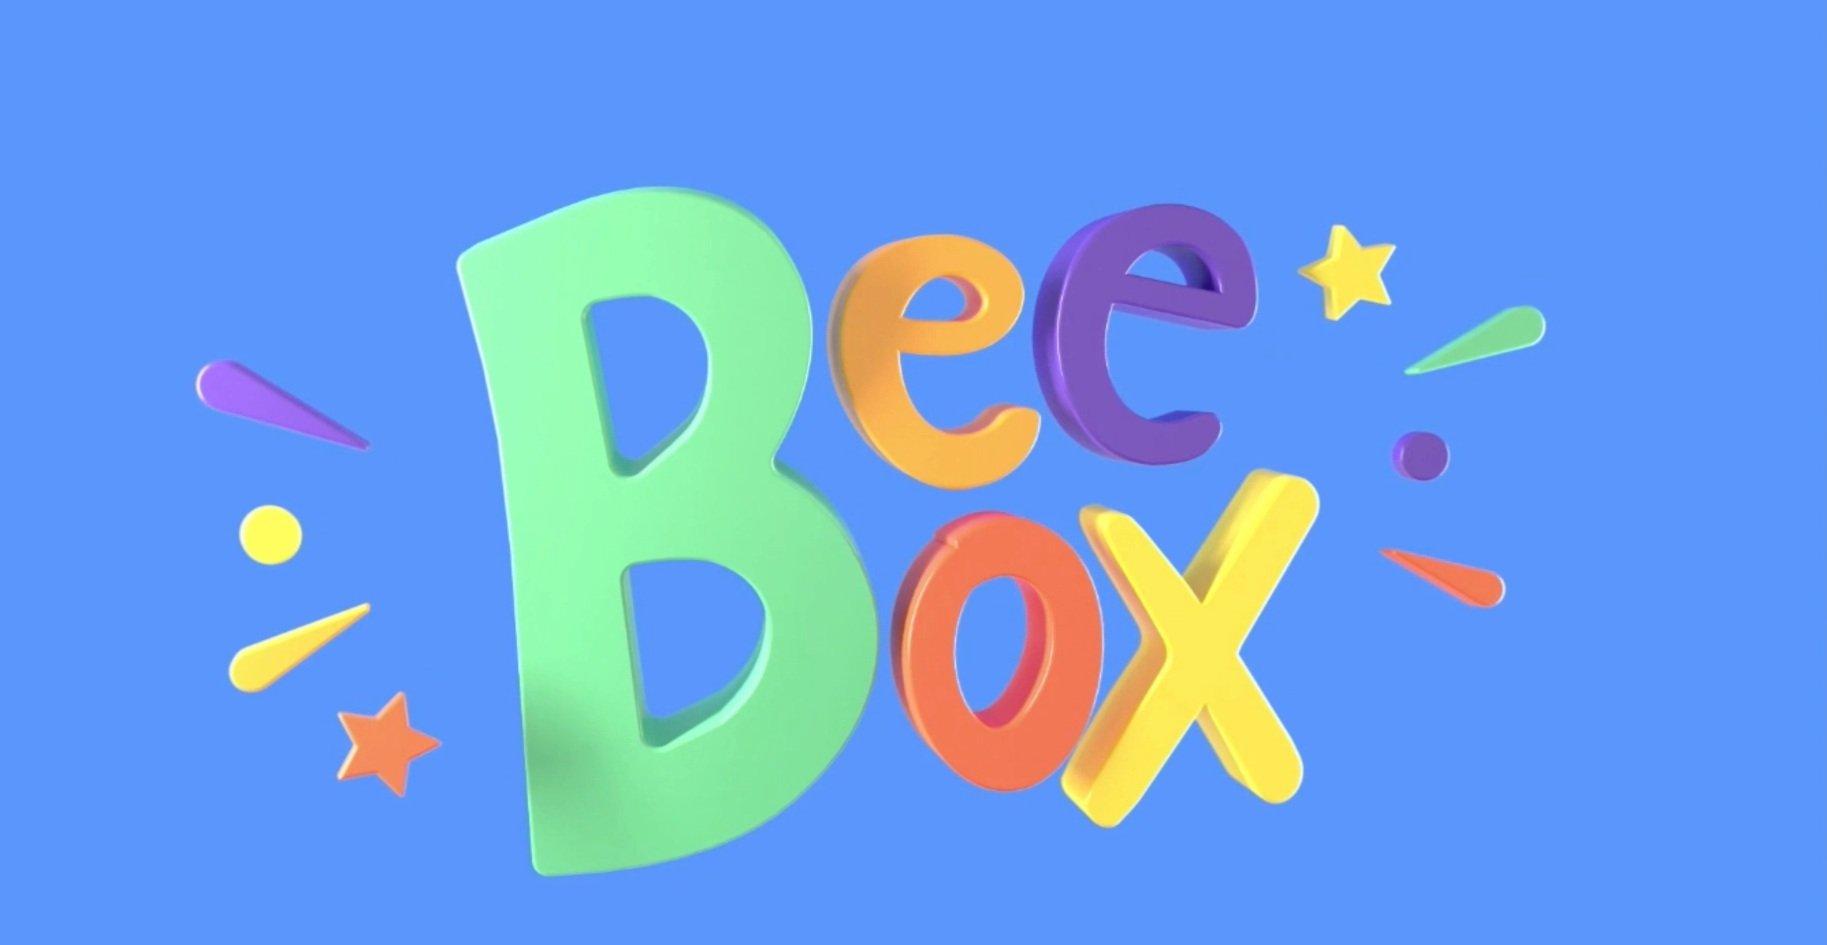 Beebox (Cbeebies)